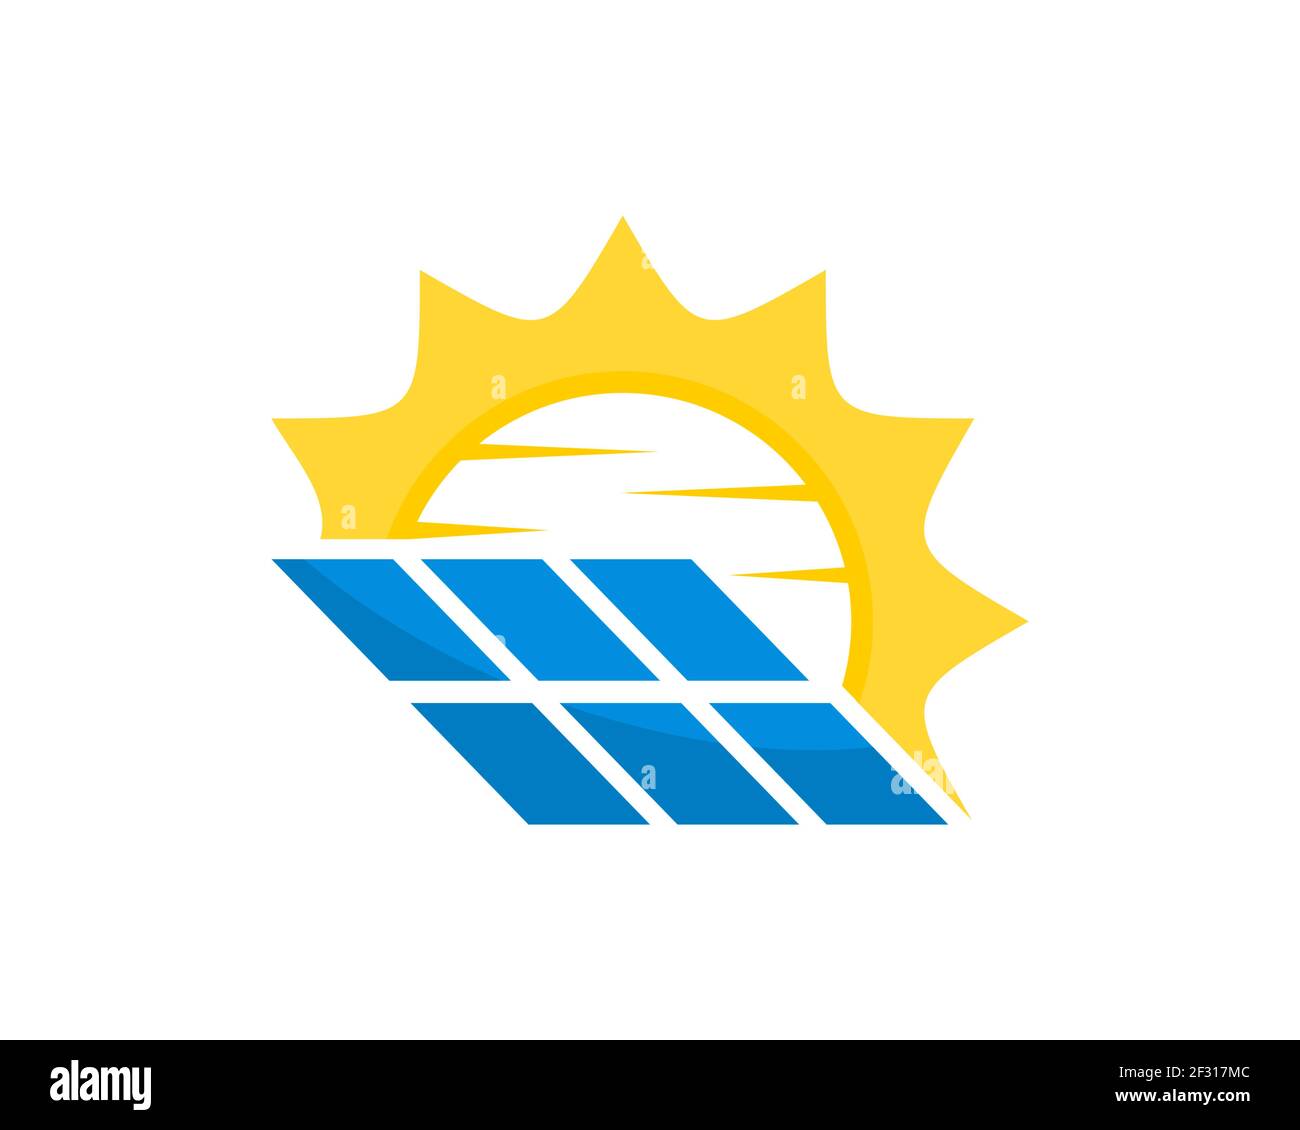 Solar energy with sunbeam logo Stock Photo